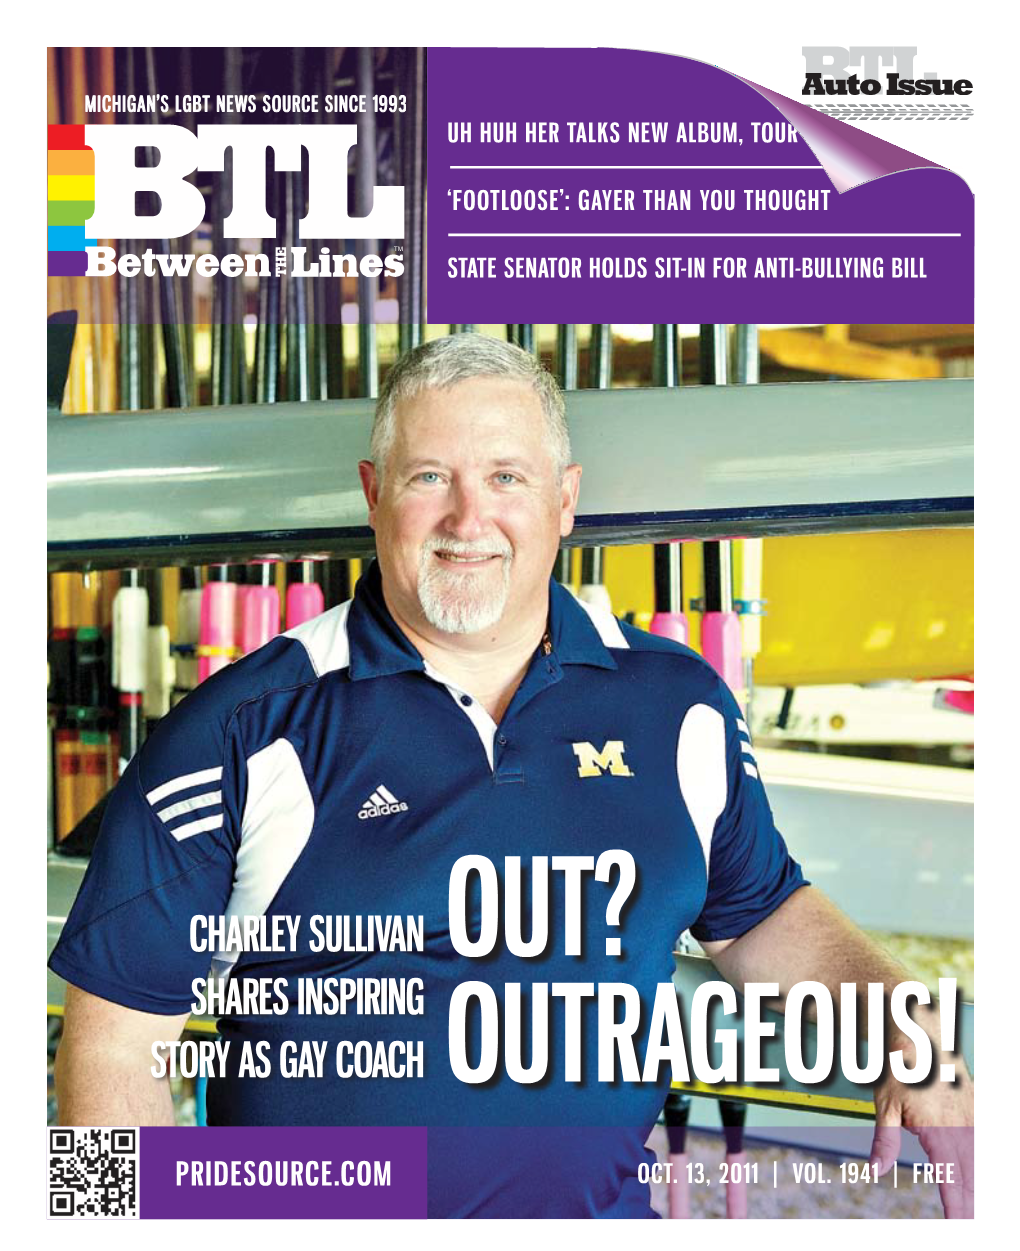 Charley Sullivan Shares Inspiring Story As Gay Coach